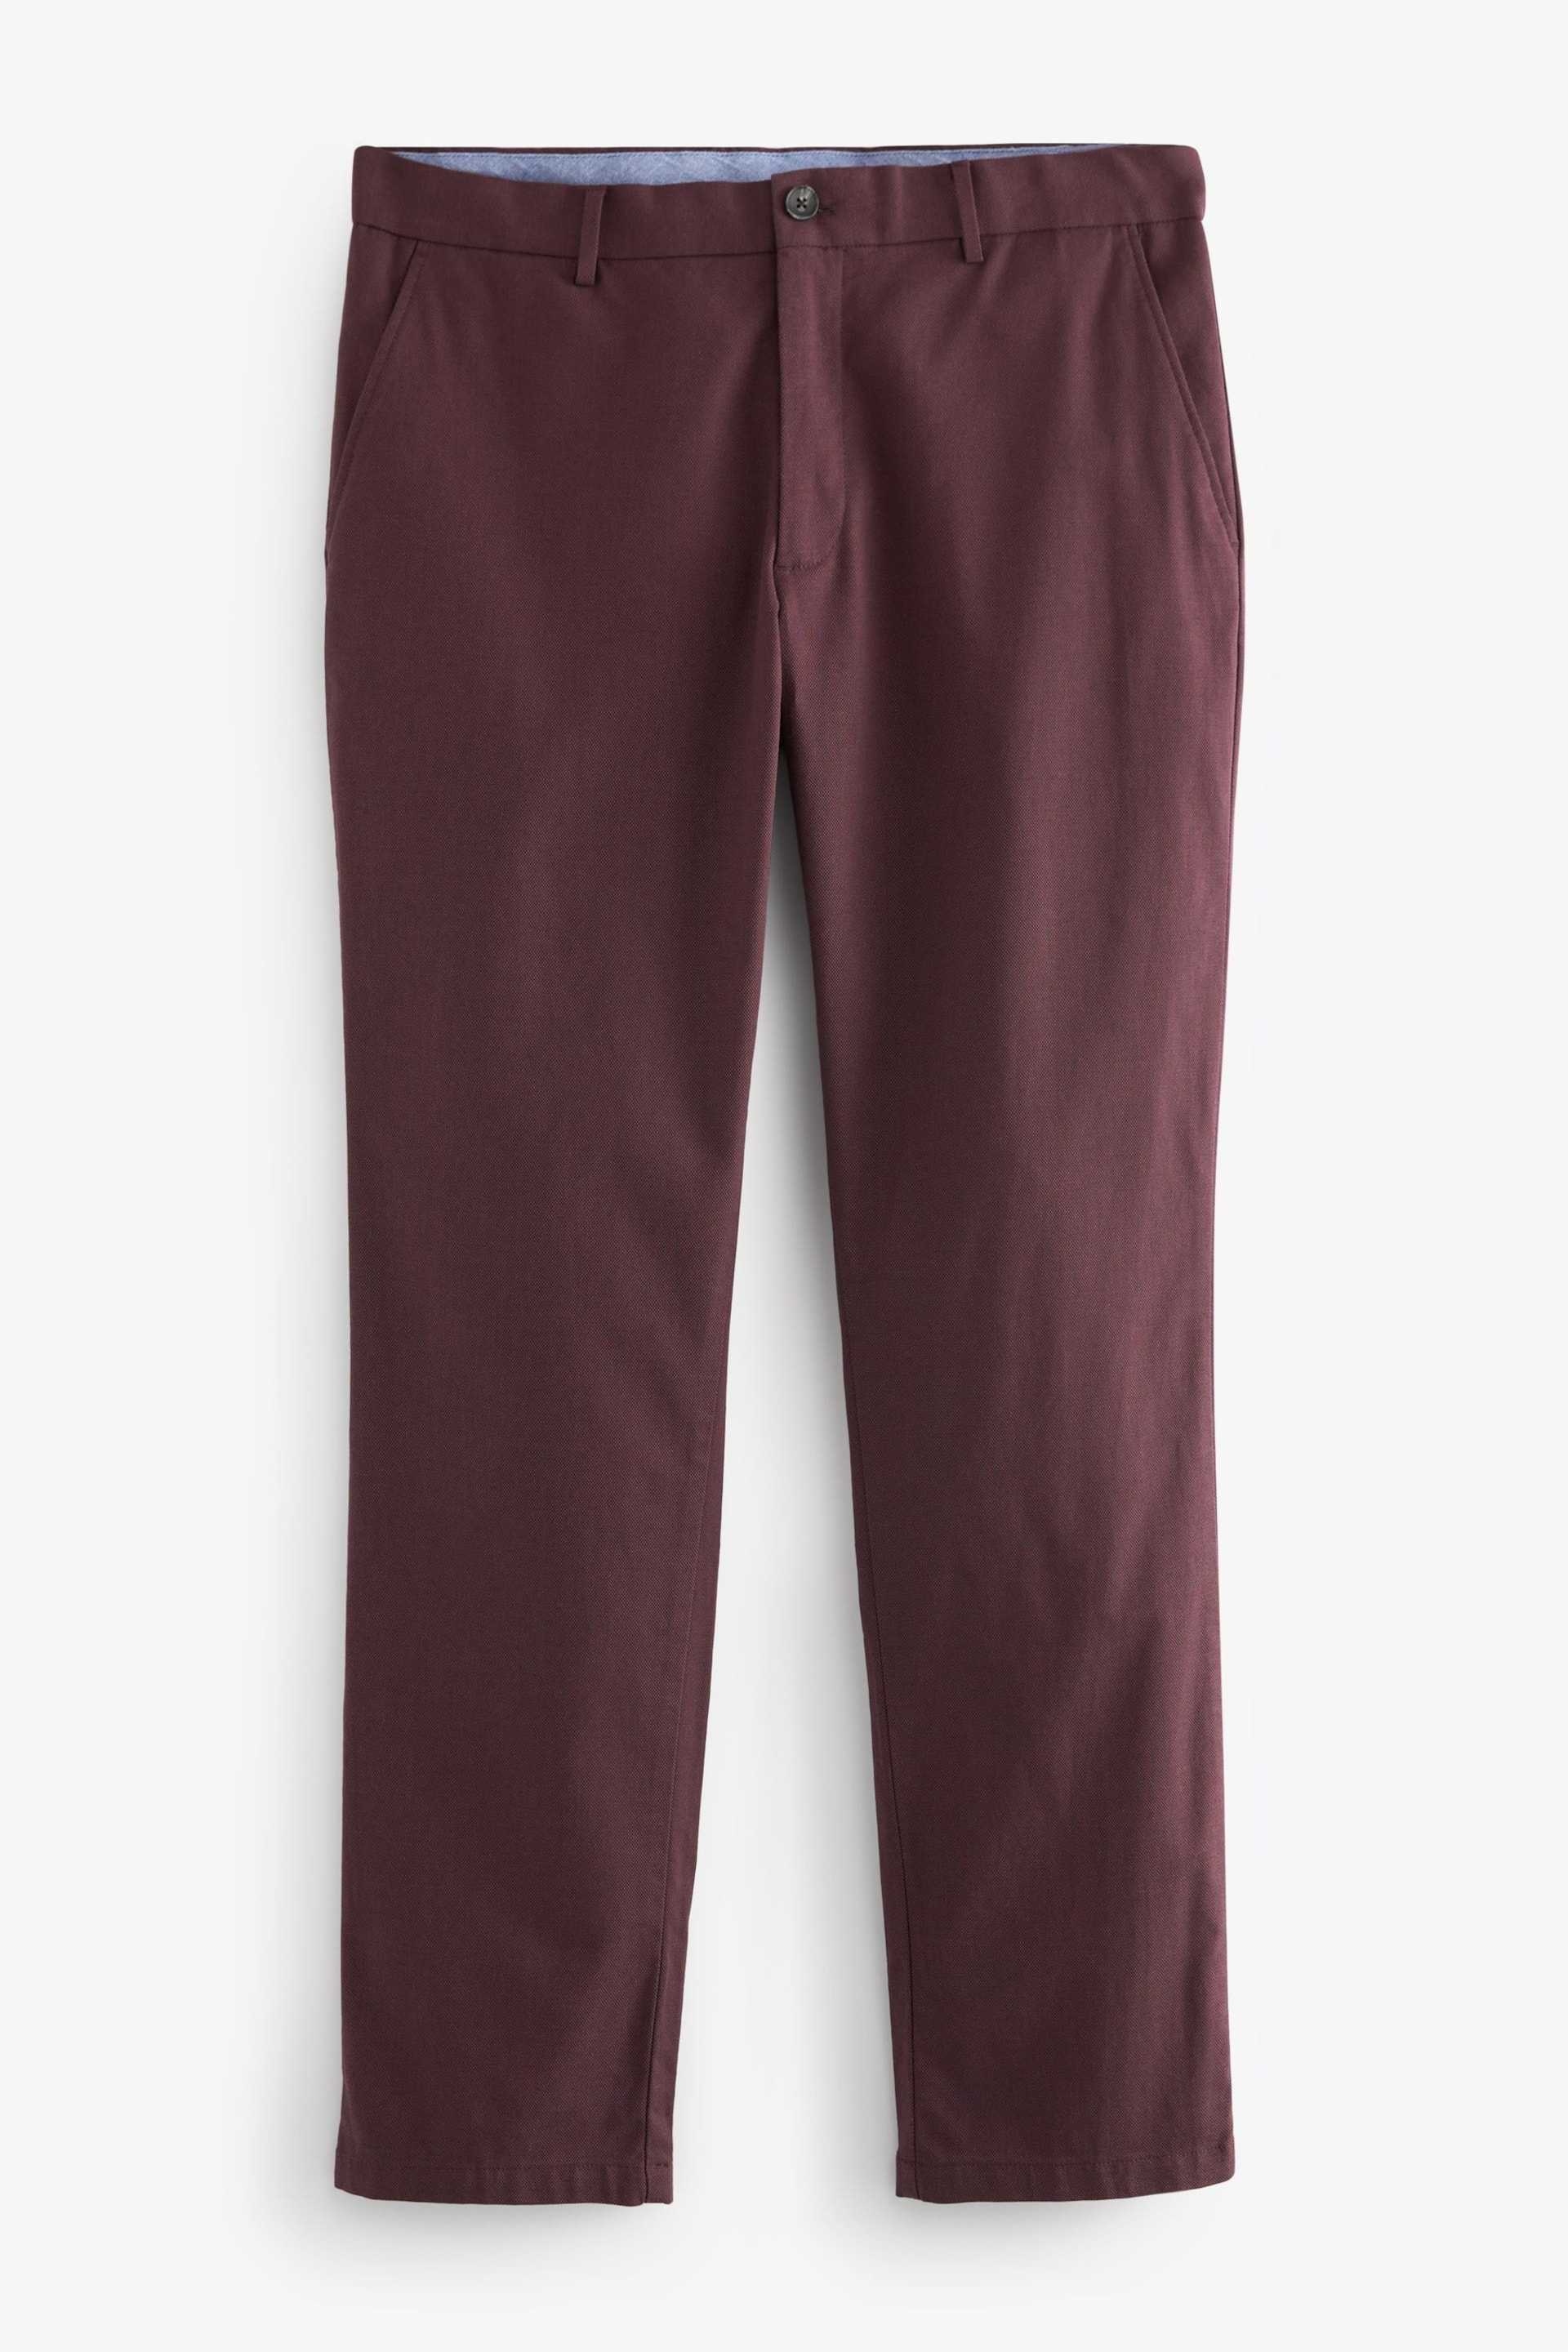 Burgundy Red Slim Smart Textured Chino Trousers - Image 6 of 9